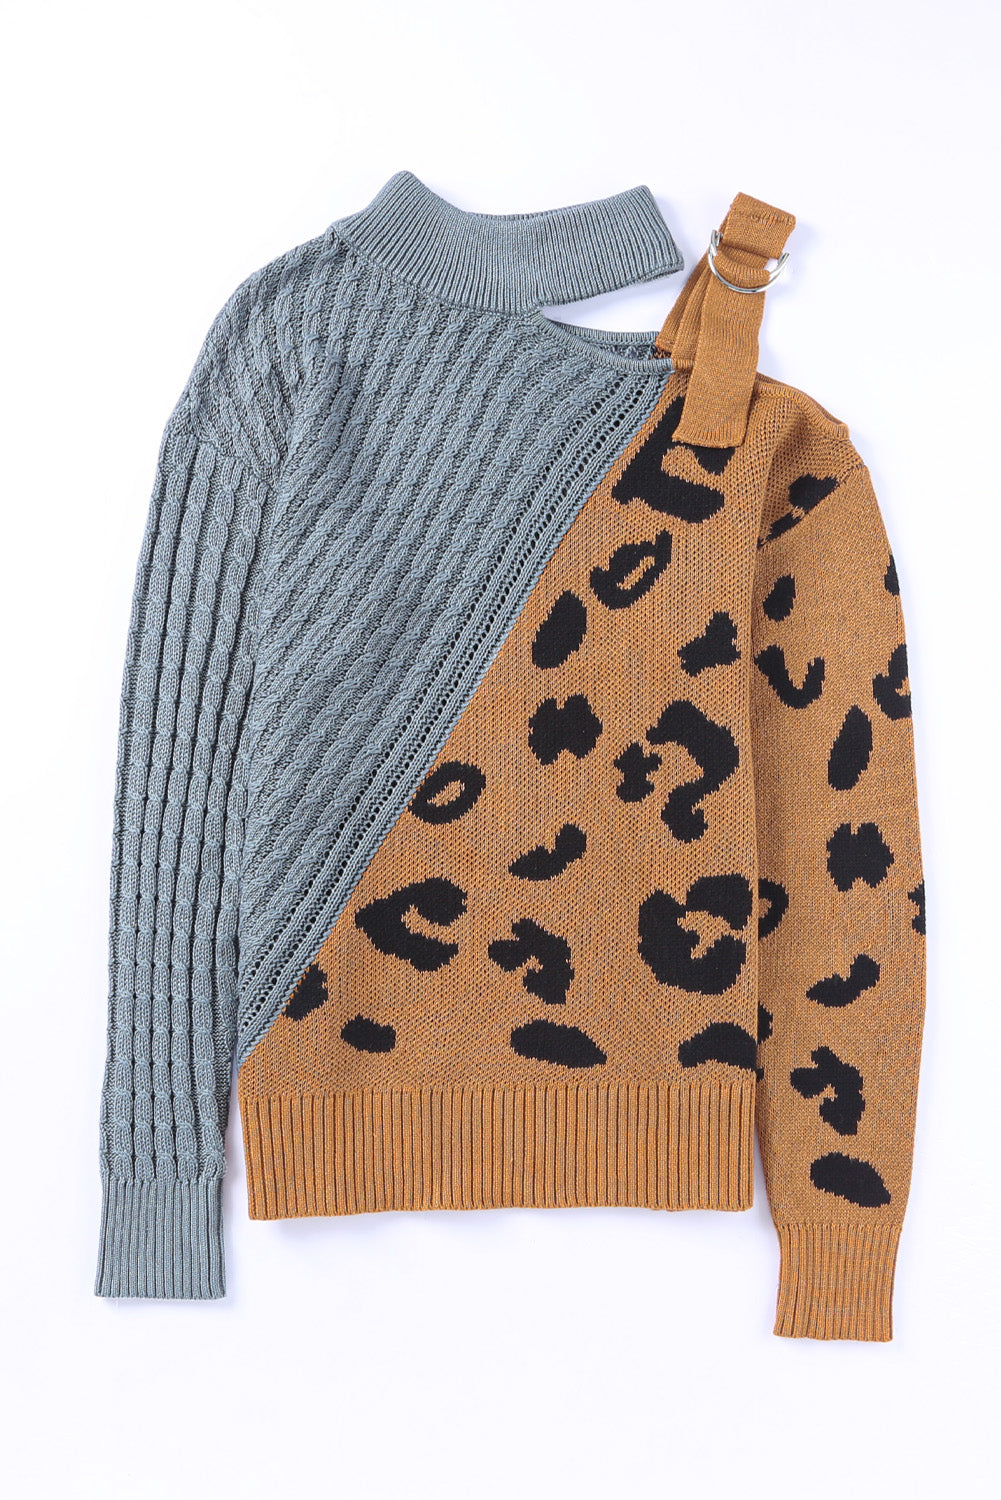 Leopard Block Turtleneck Sweater - Cloudy Blue / 2XL Apparel & Accessories Wynter 4 All Seasons